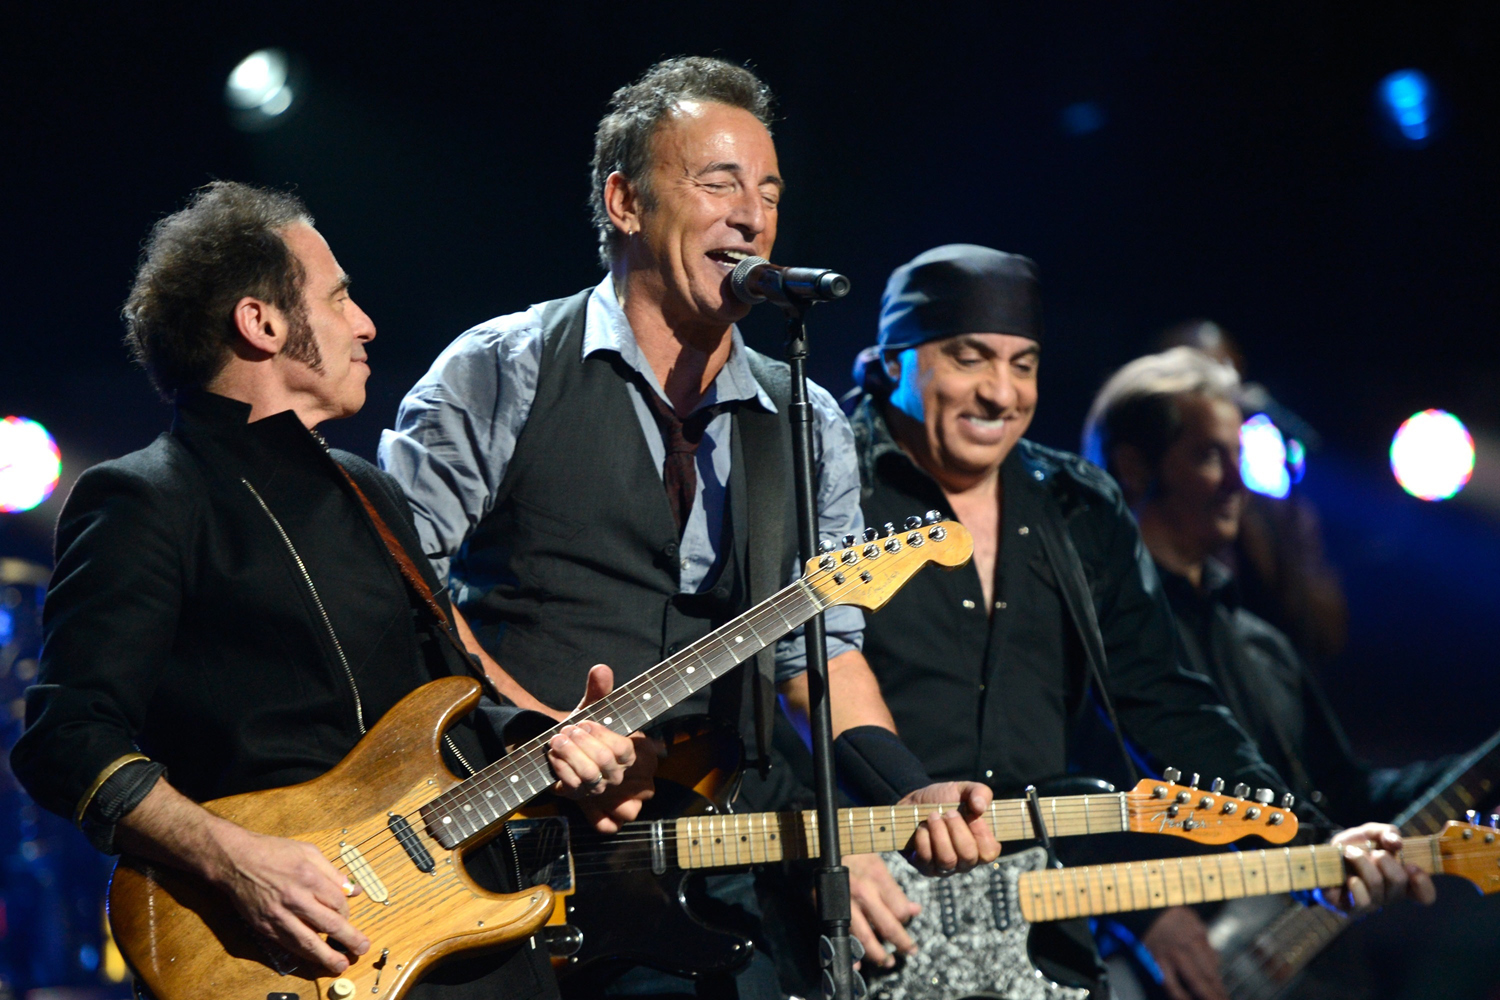 Nils Lofgren, Bruce Springsteen and Steven Van Zandt of The E Street Band perform